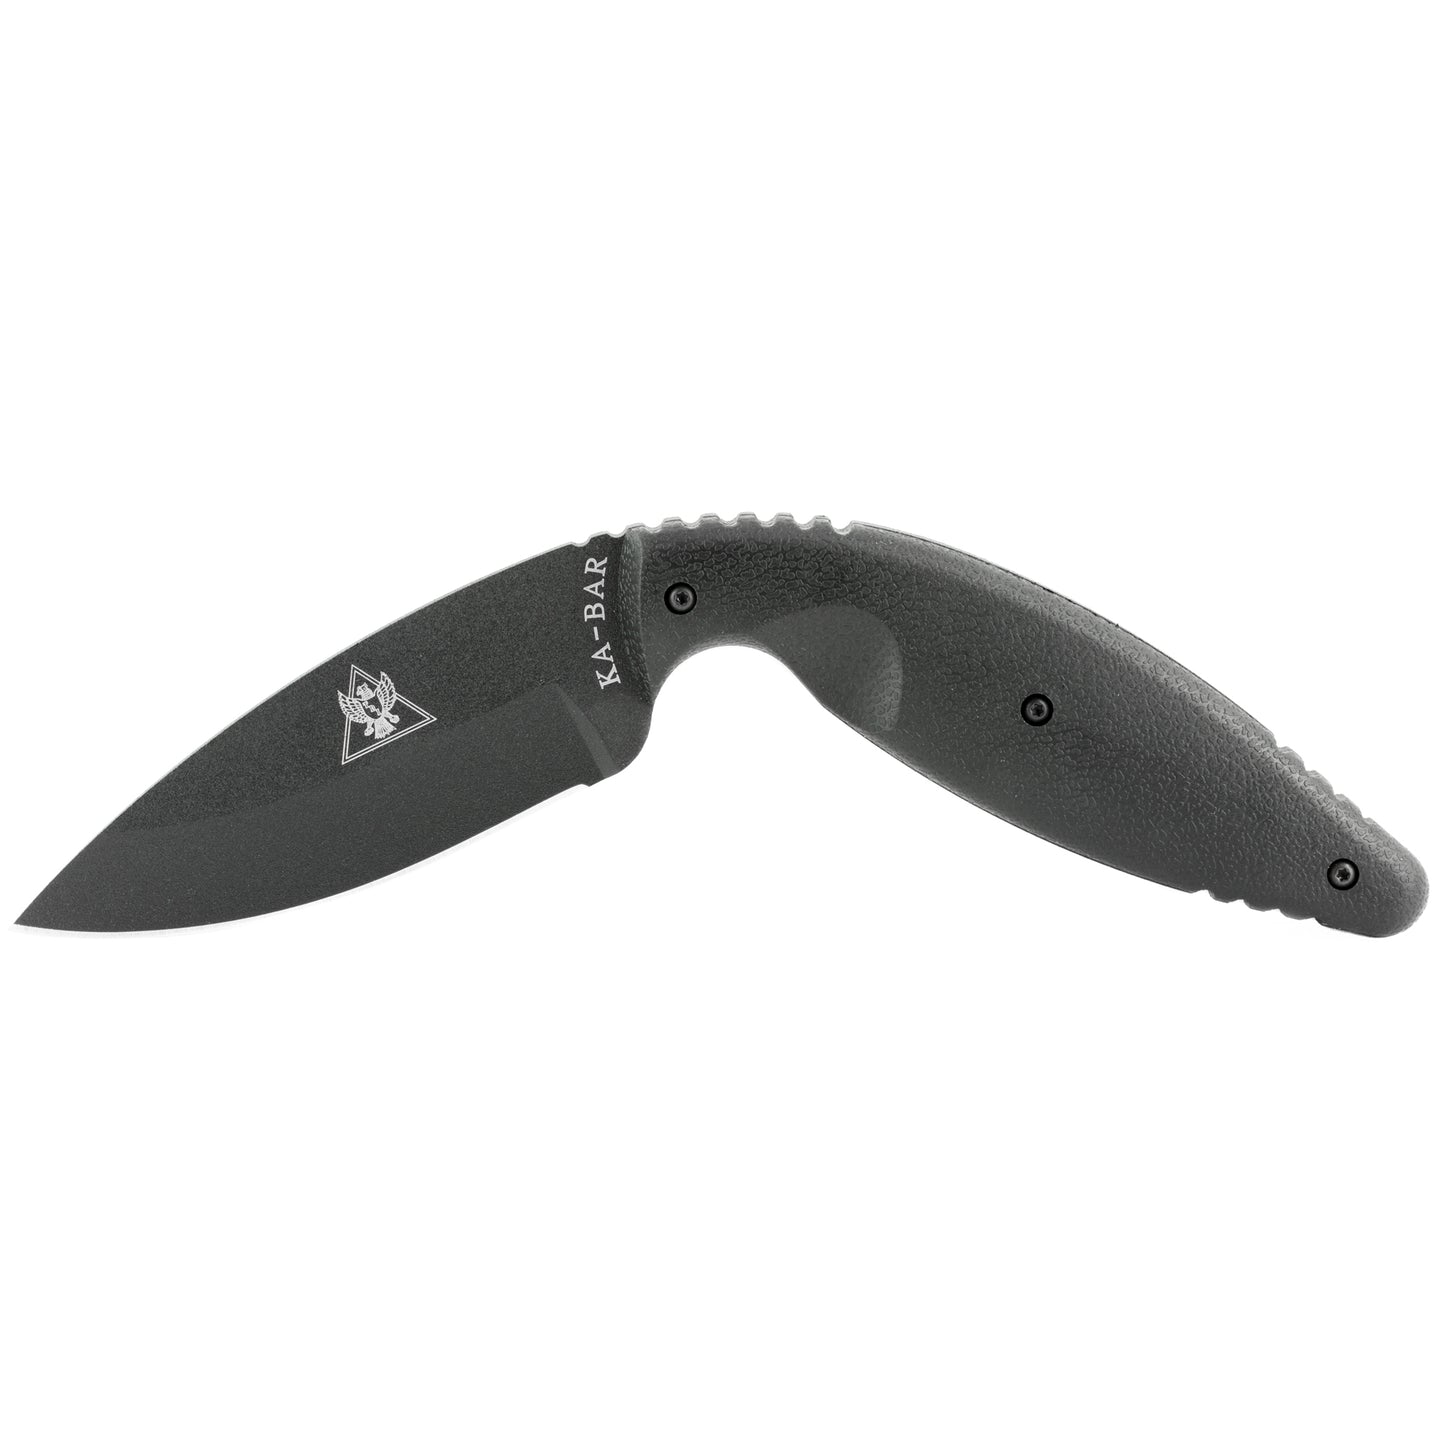 KABAR TDI Law Enforcement Fixed Blade Knife 3.6 DropPoint Black Plain Edge 1482 - California Shooting Supplies